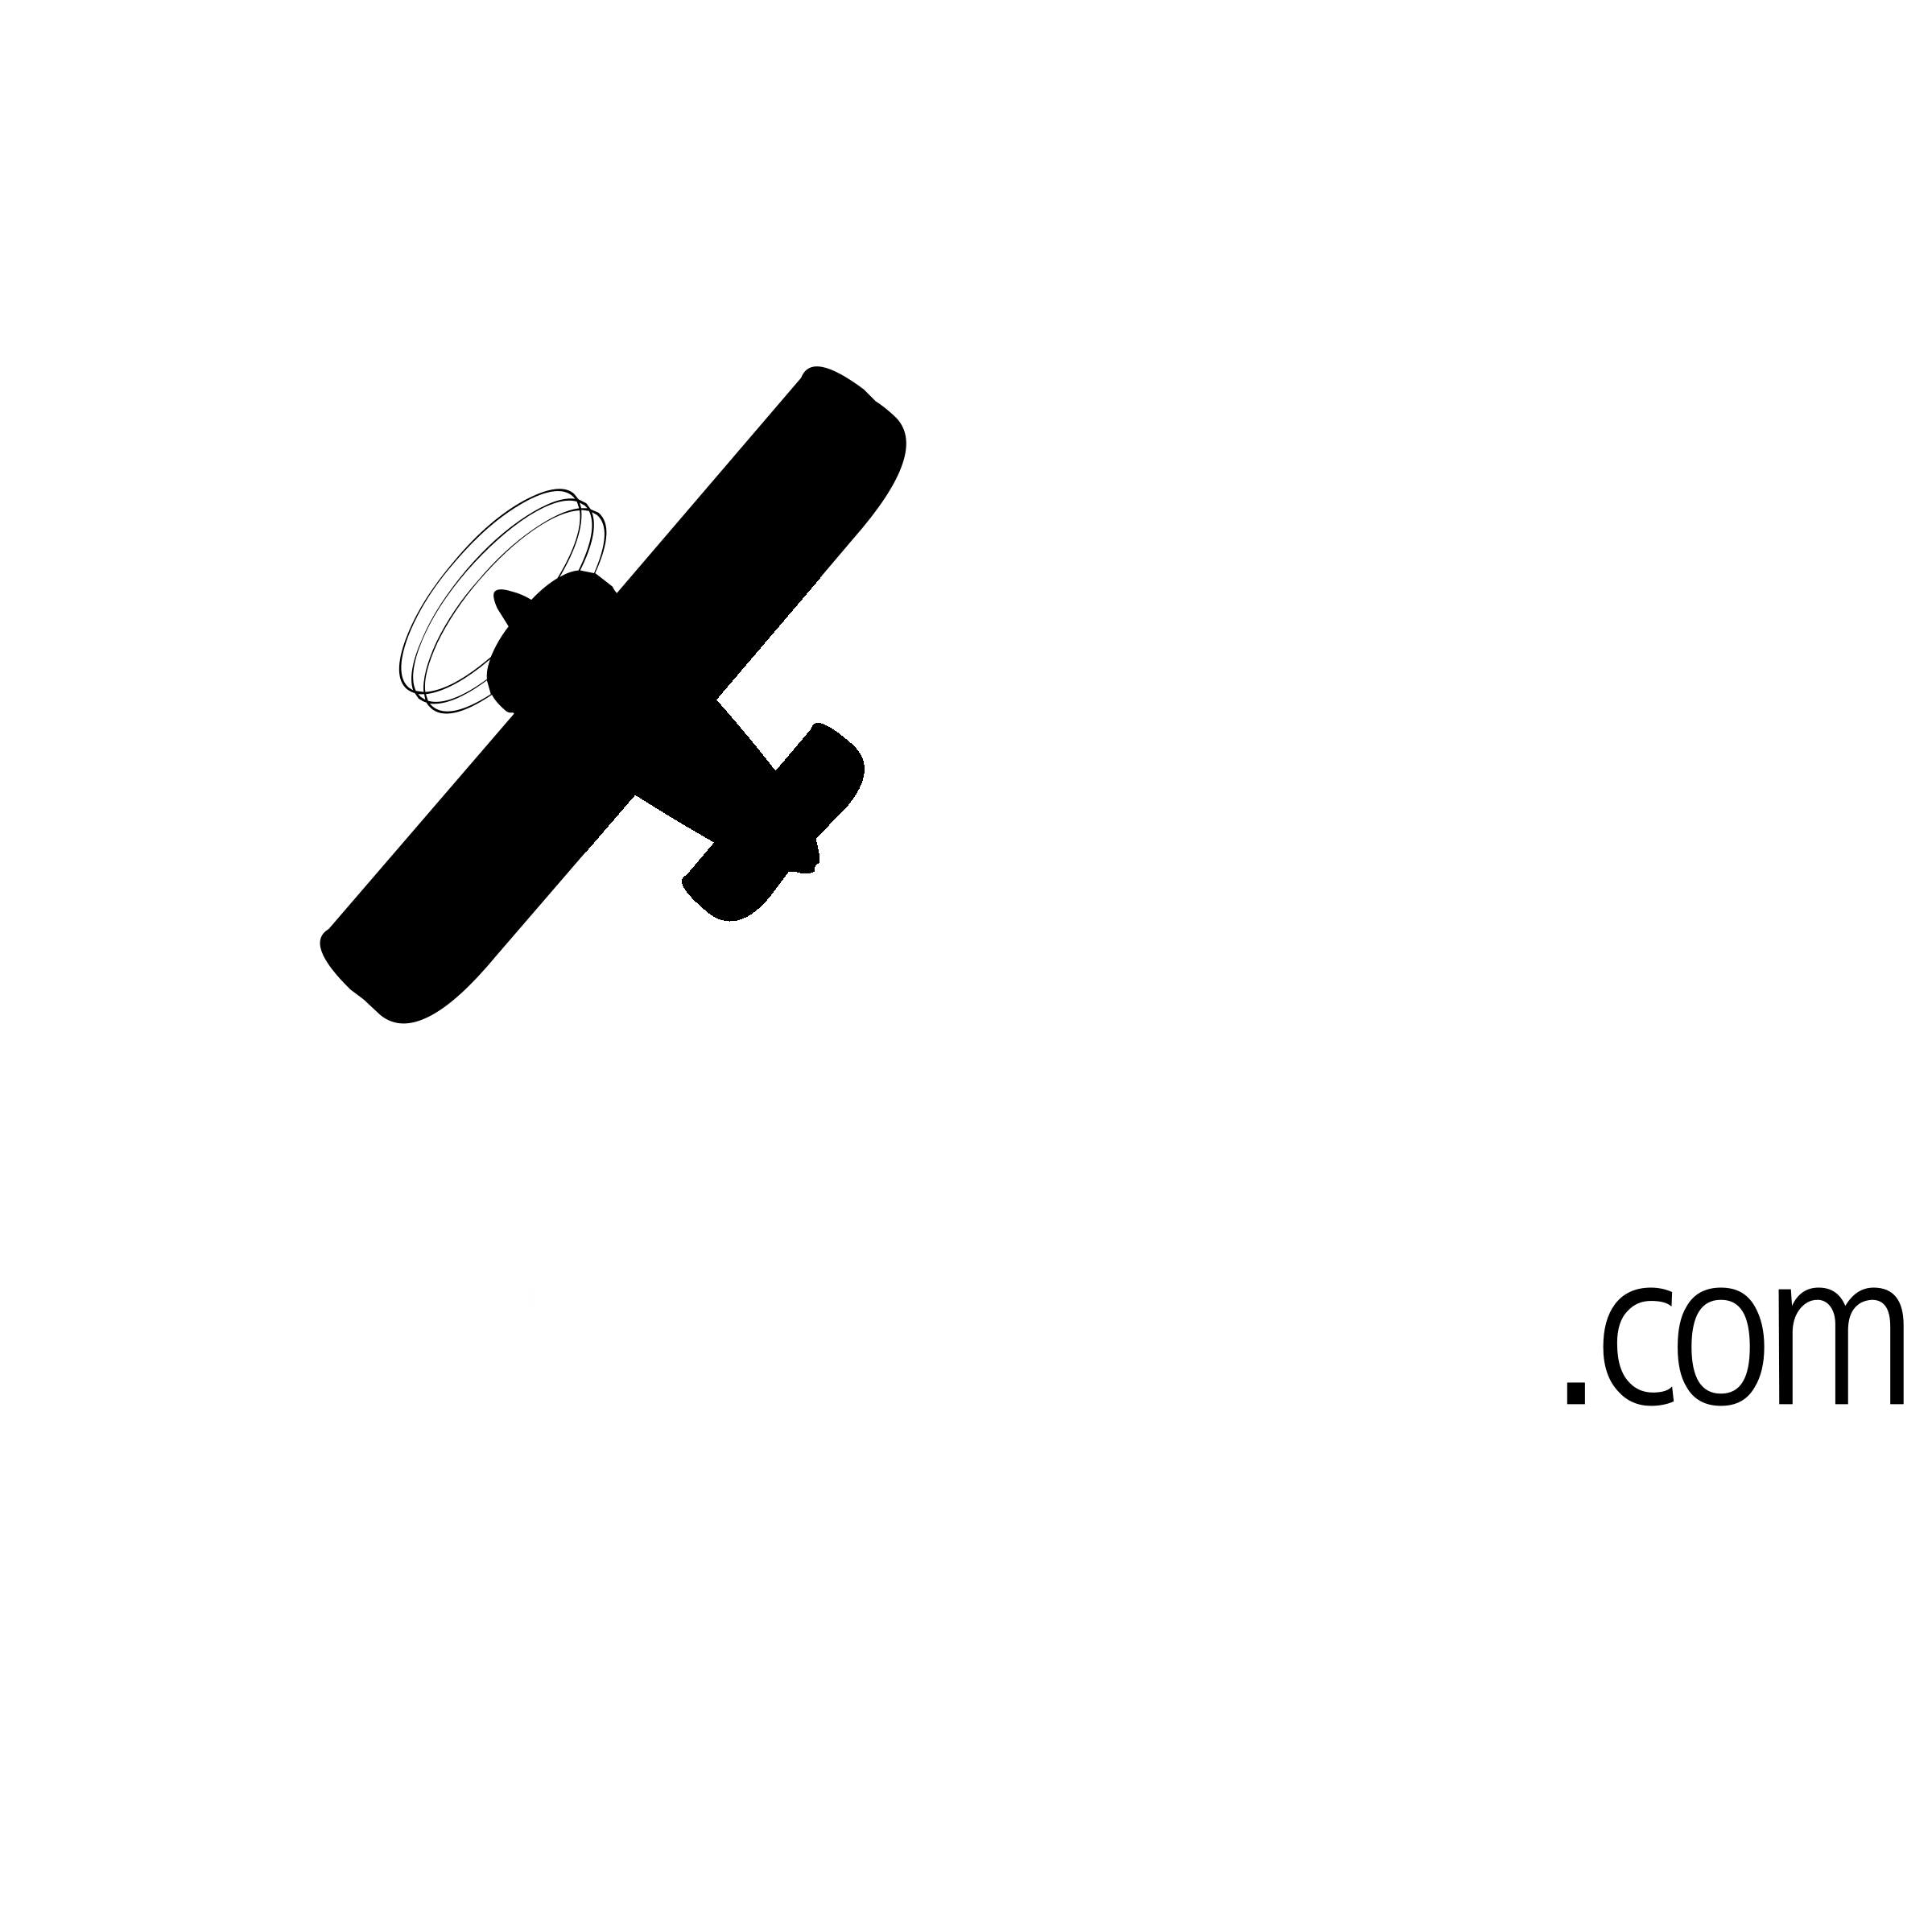 Pilot Logo - Internet pilot Logo PNG Transparent & SVG Vector - Freebie Supply